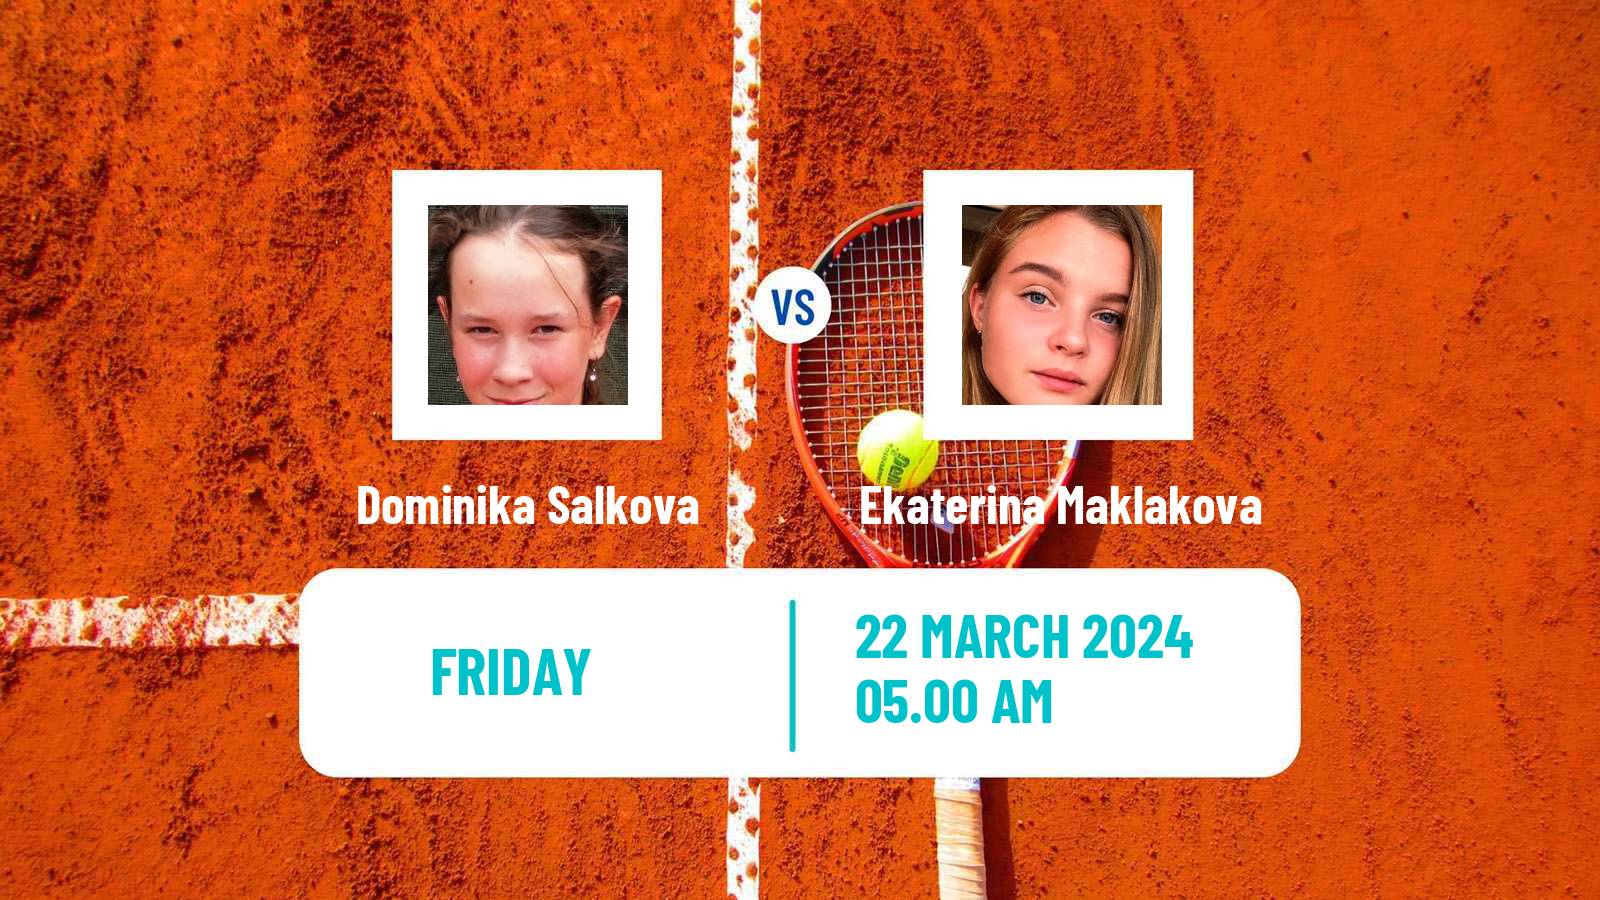 Tennis ITF W75 MarIBOr Women Dominika Salkova - Ekaterina Maklakova